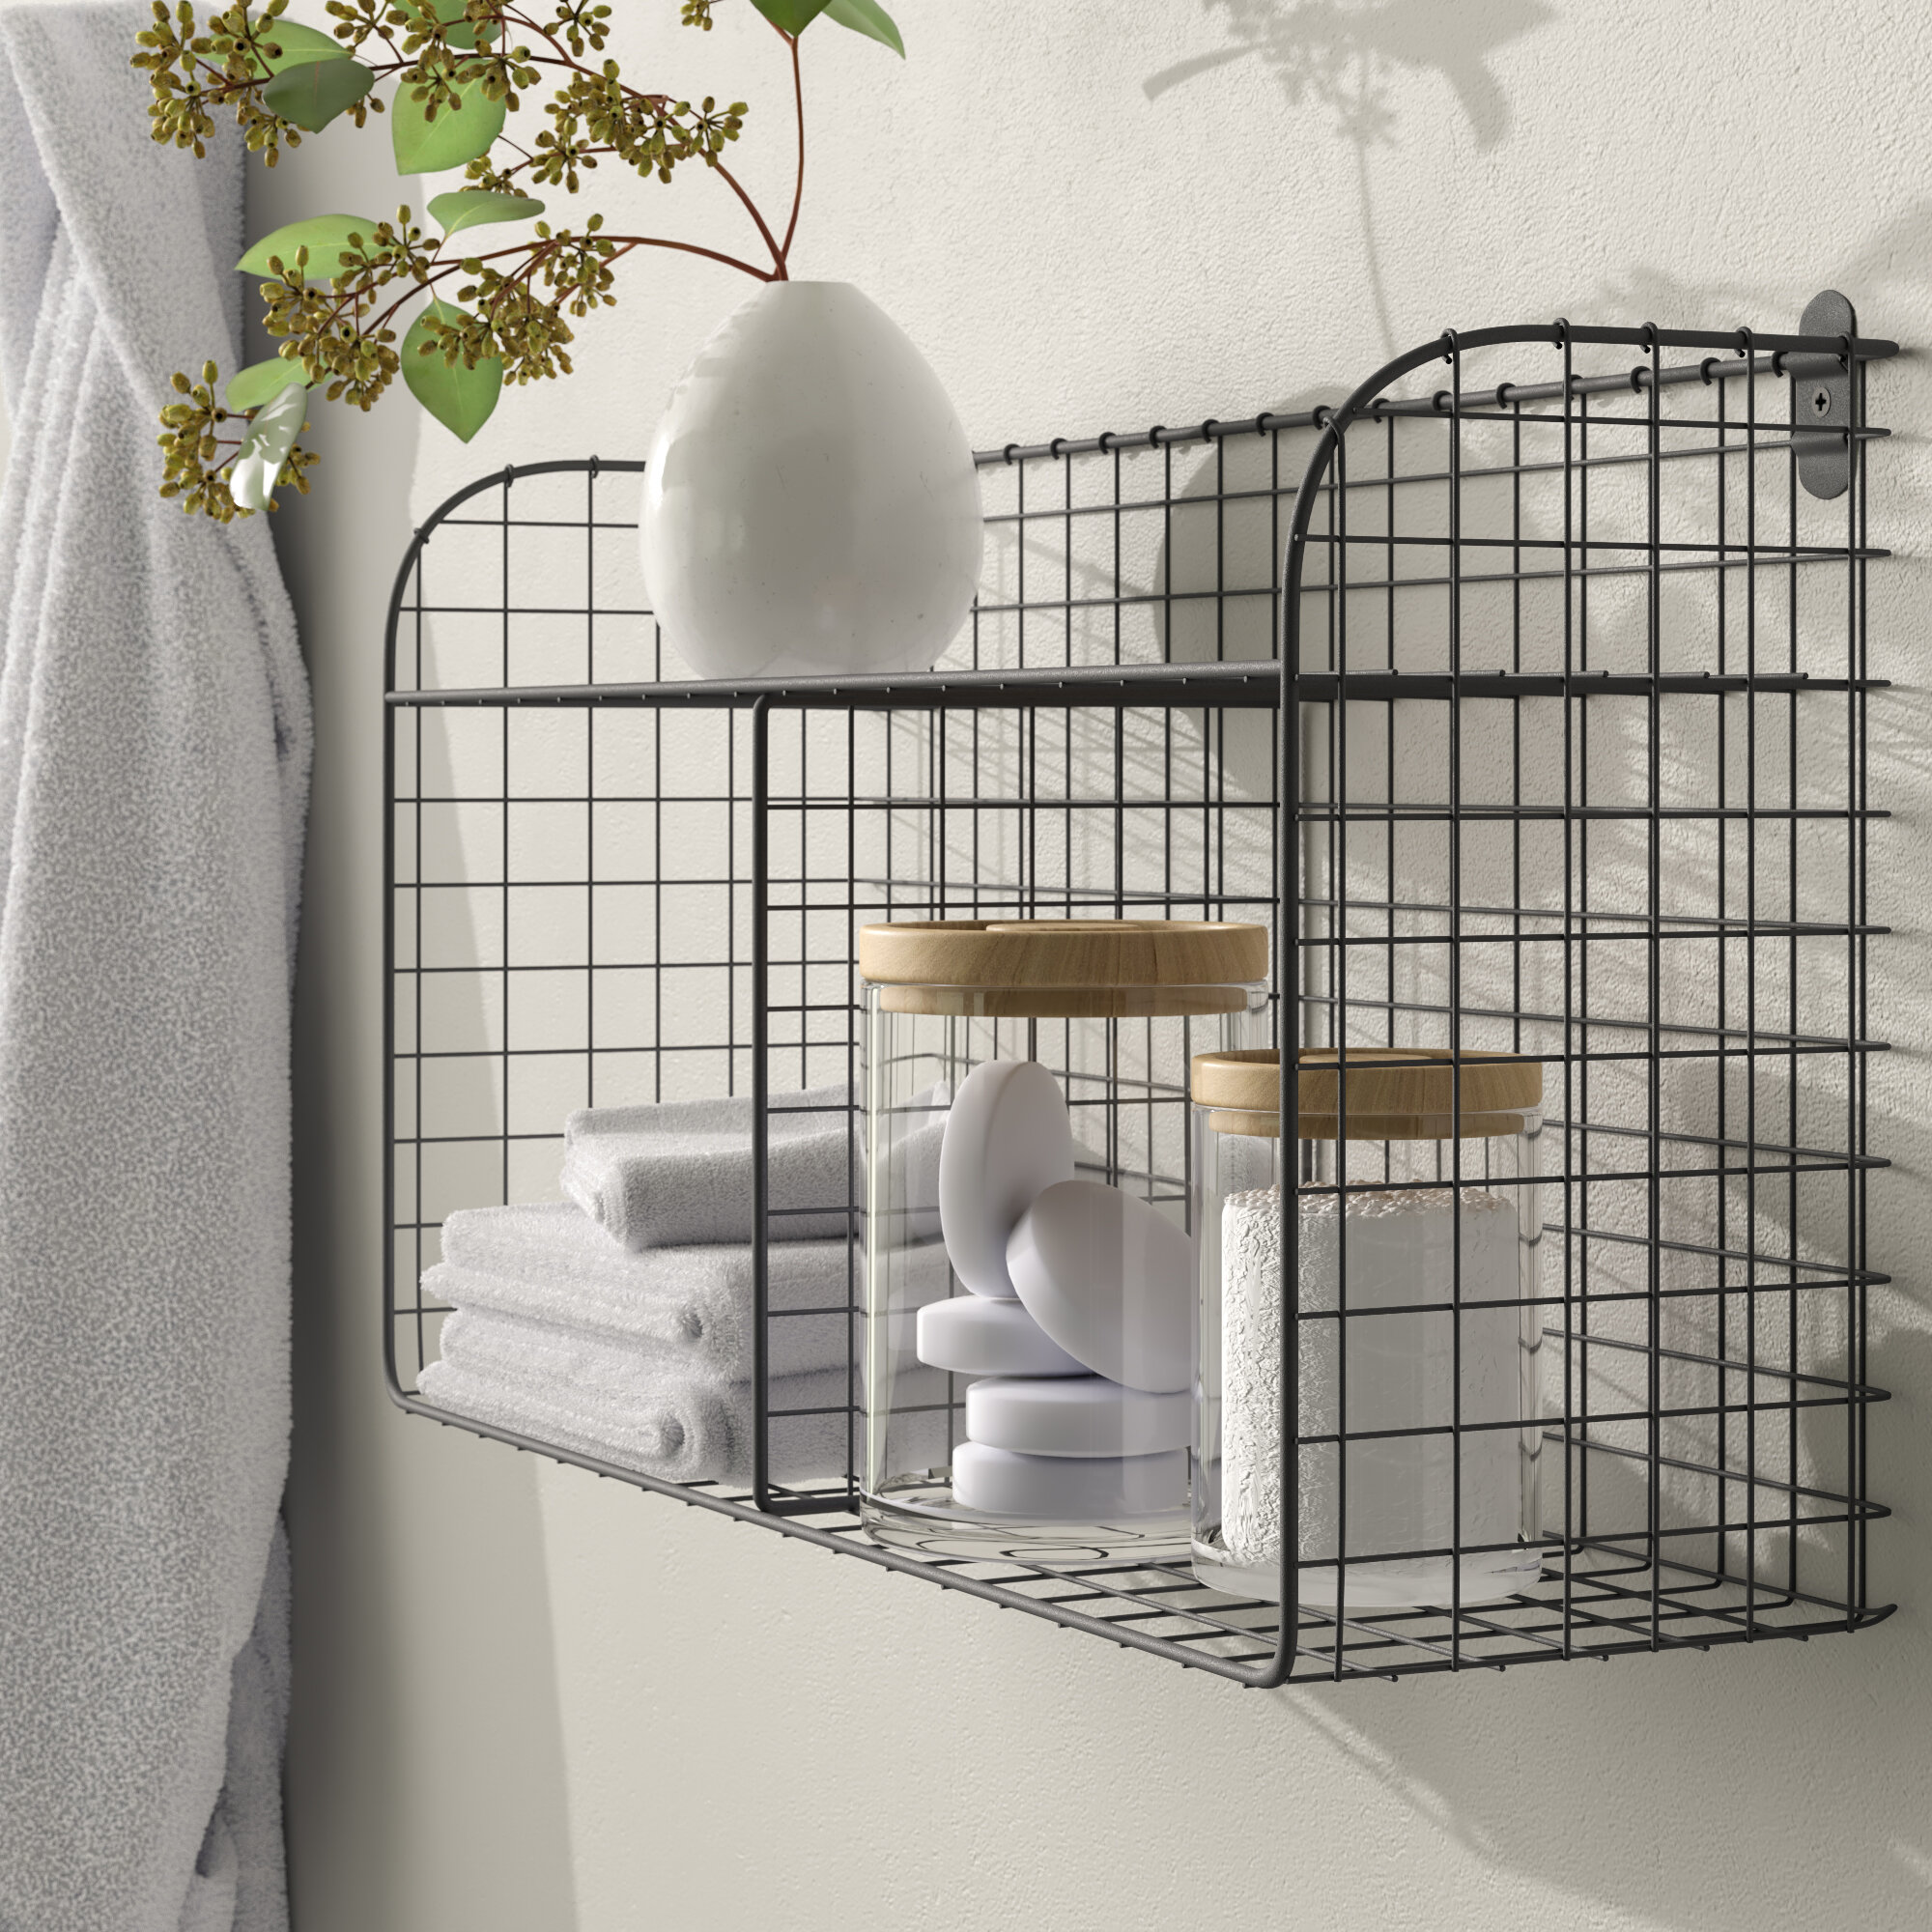 Wall Rack Storage Hanging Basket Holder Organizer Home Display Durable Good New 